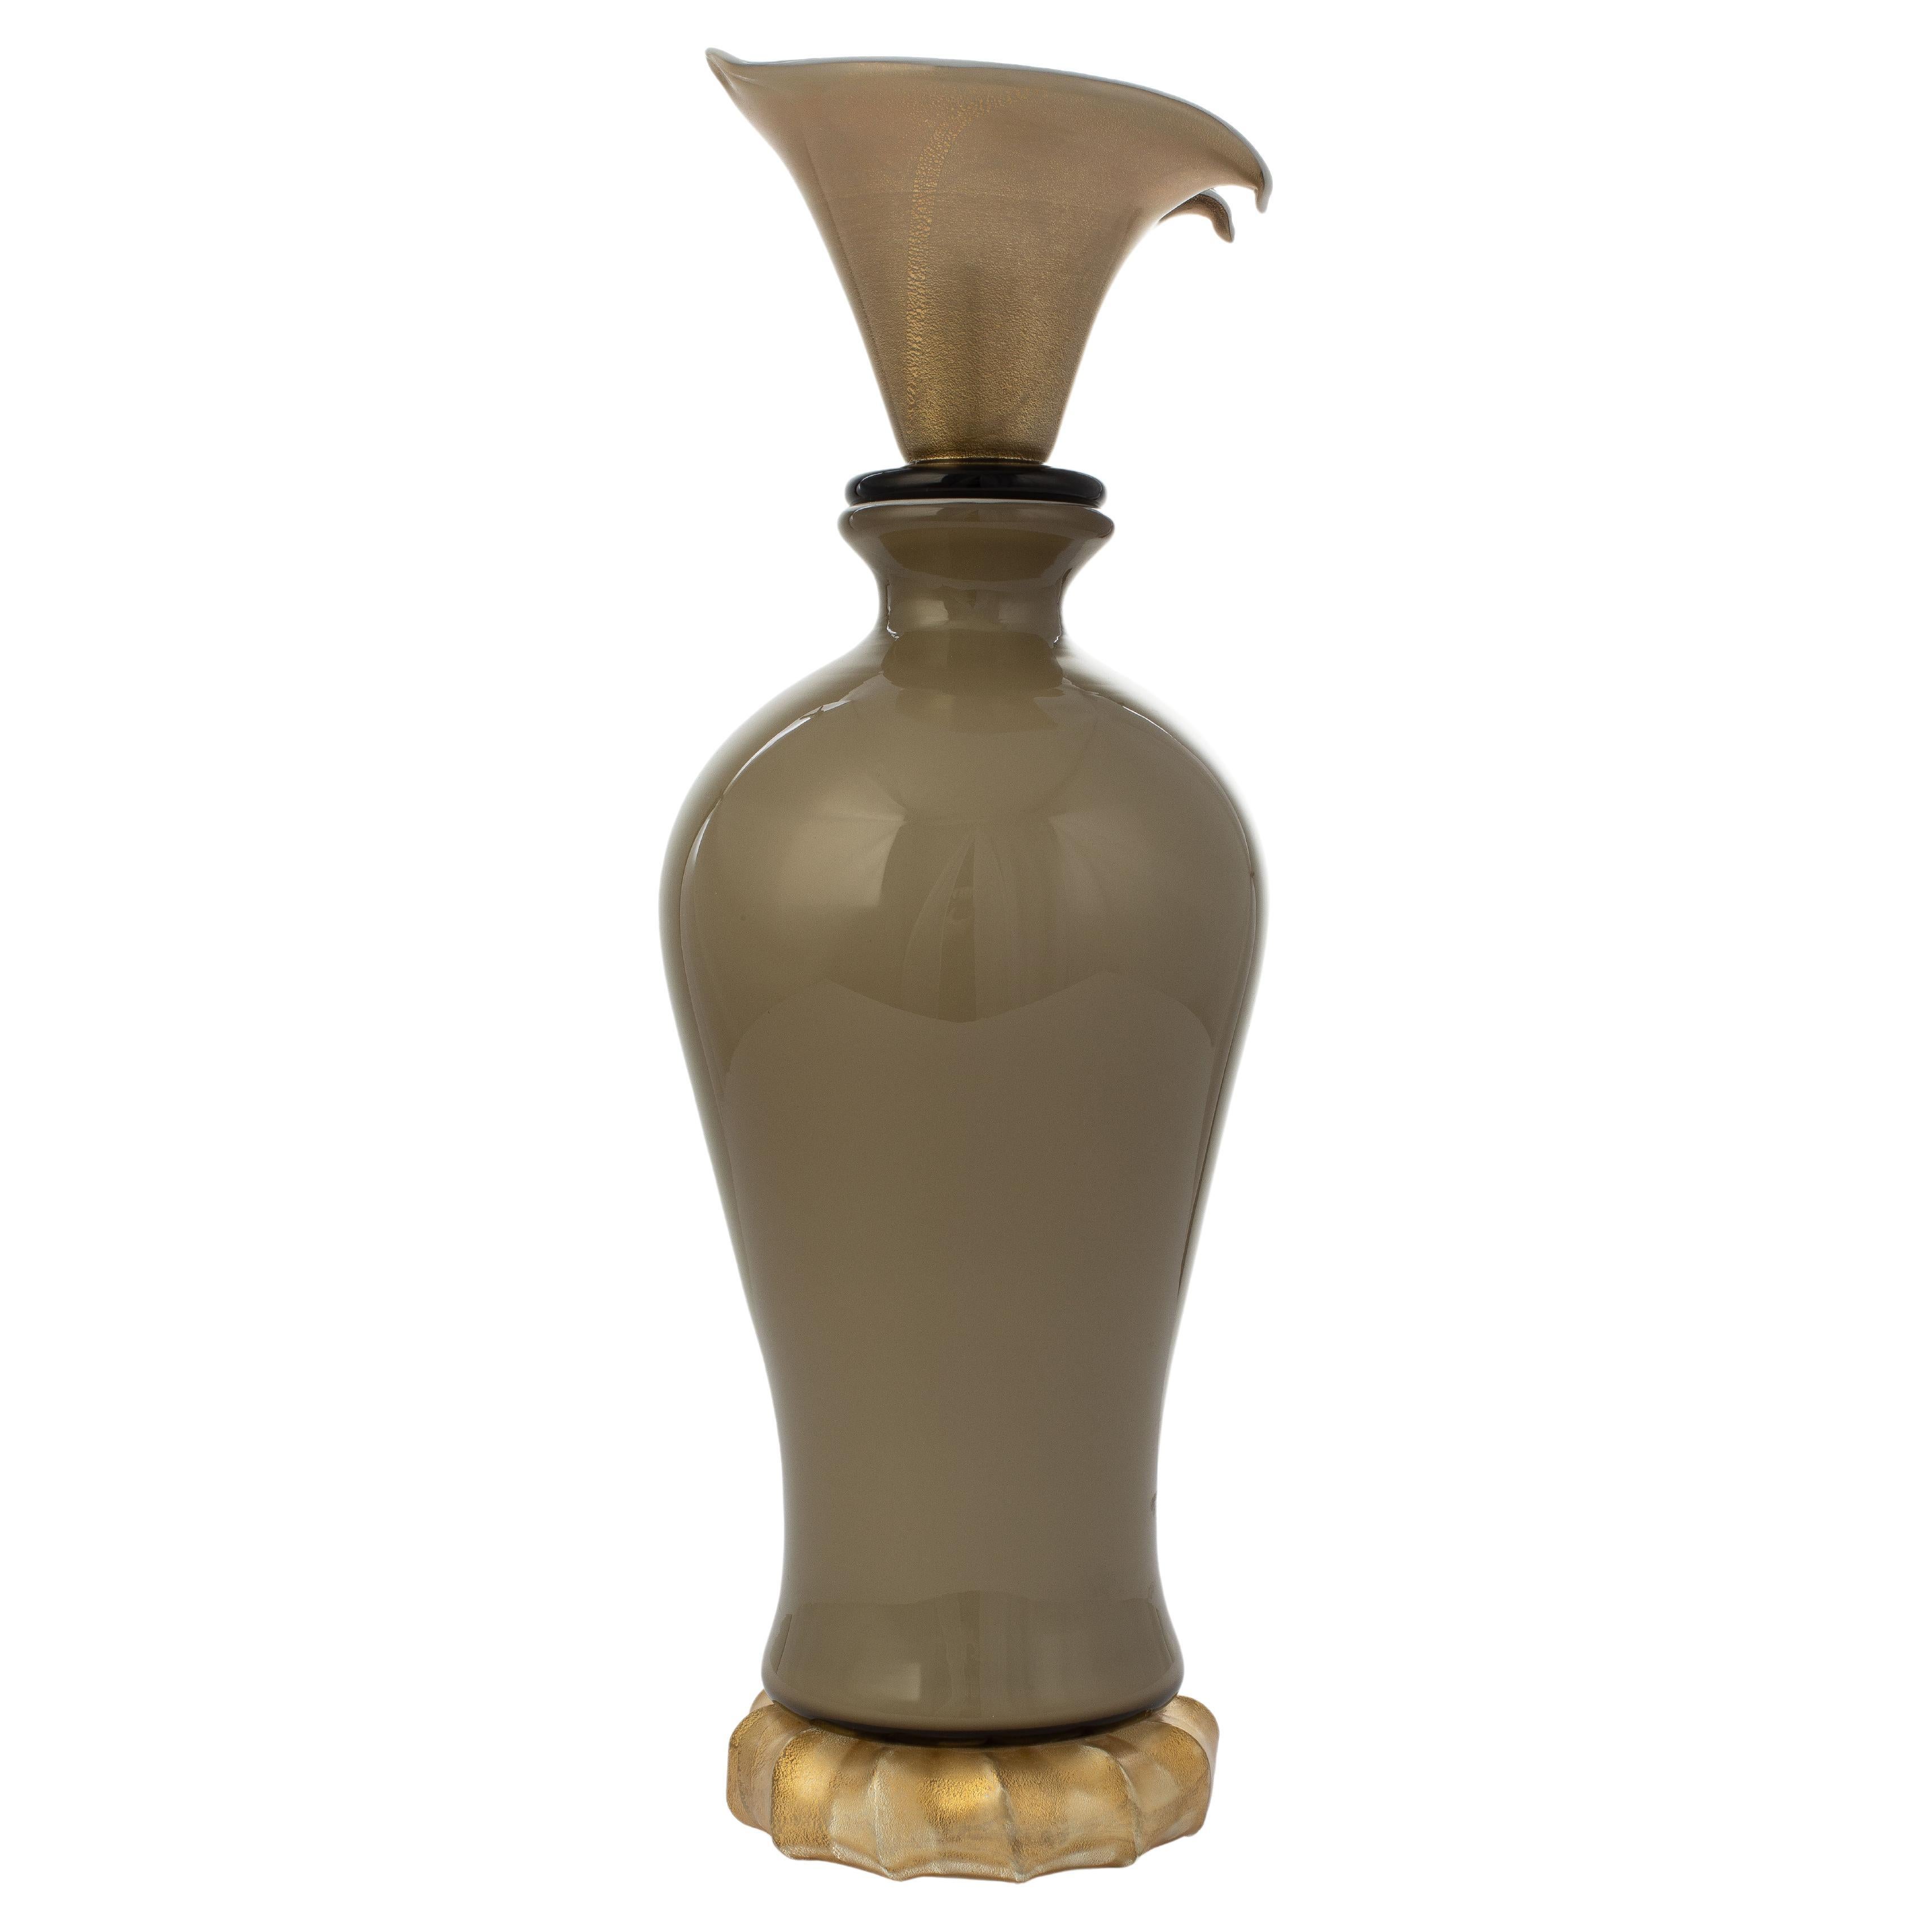 1295 Murano Hand Made Art Glass Venezia Doge Vase / Bottle